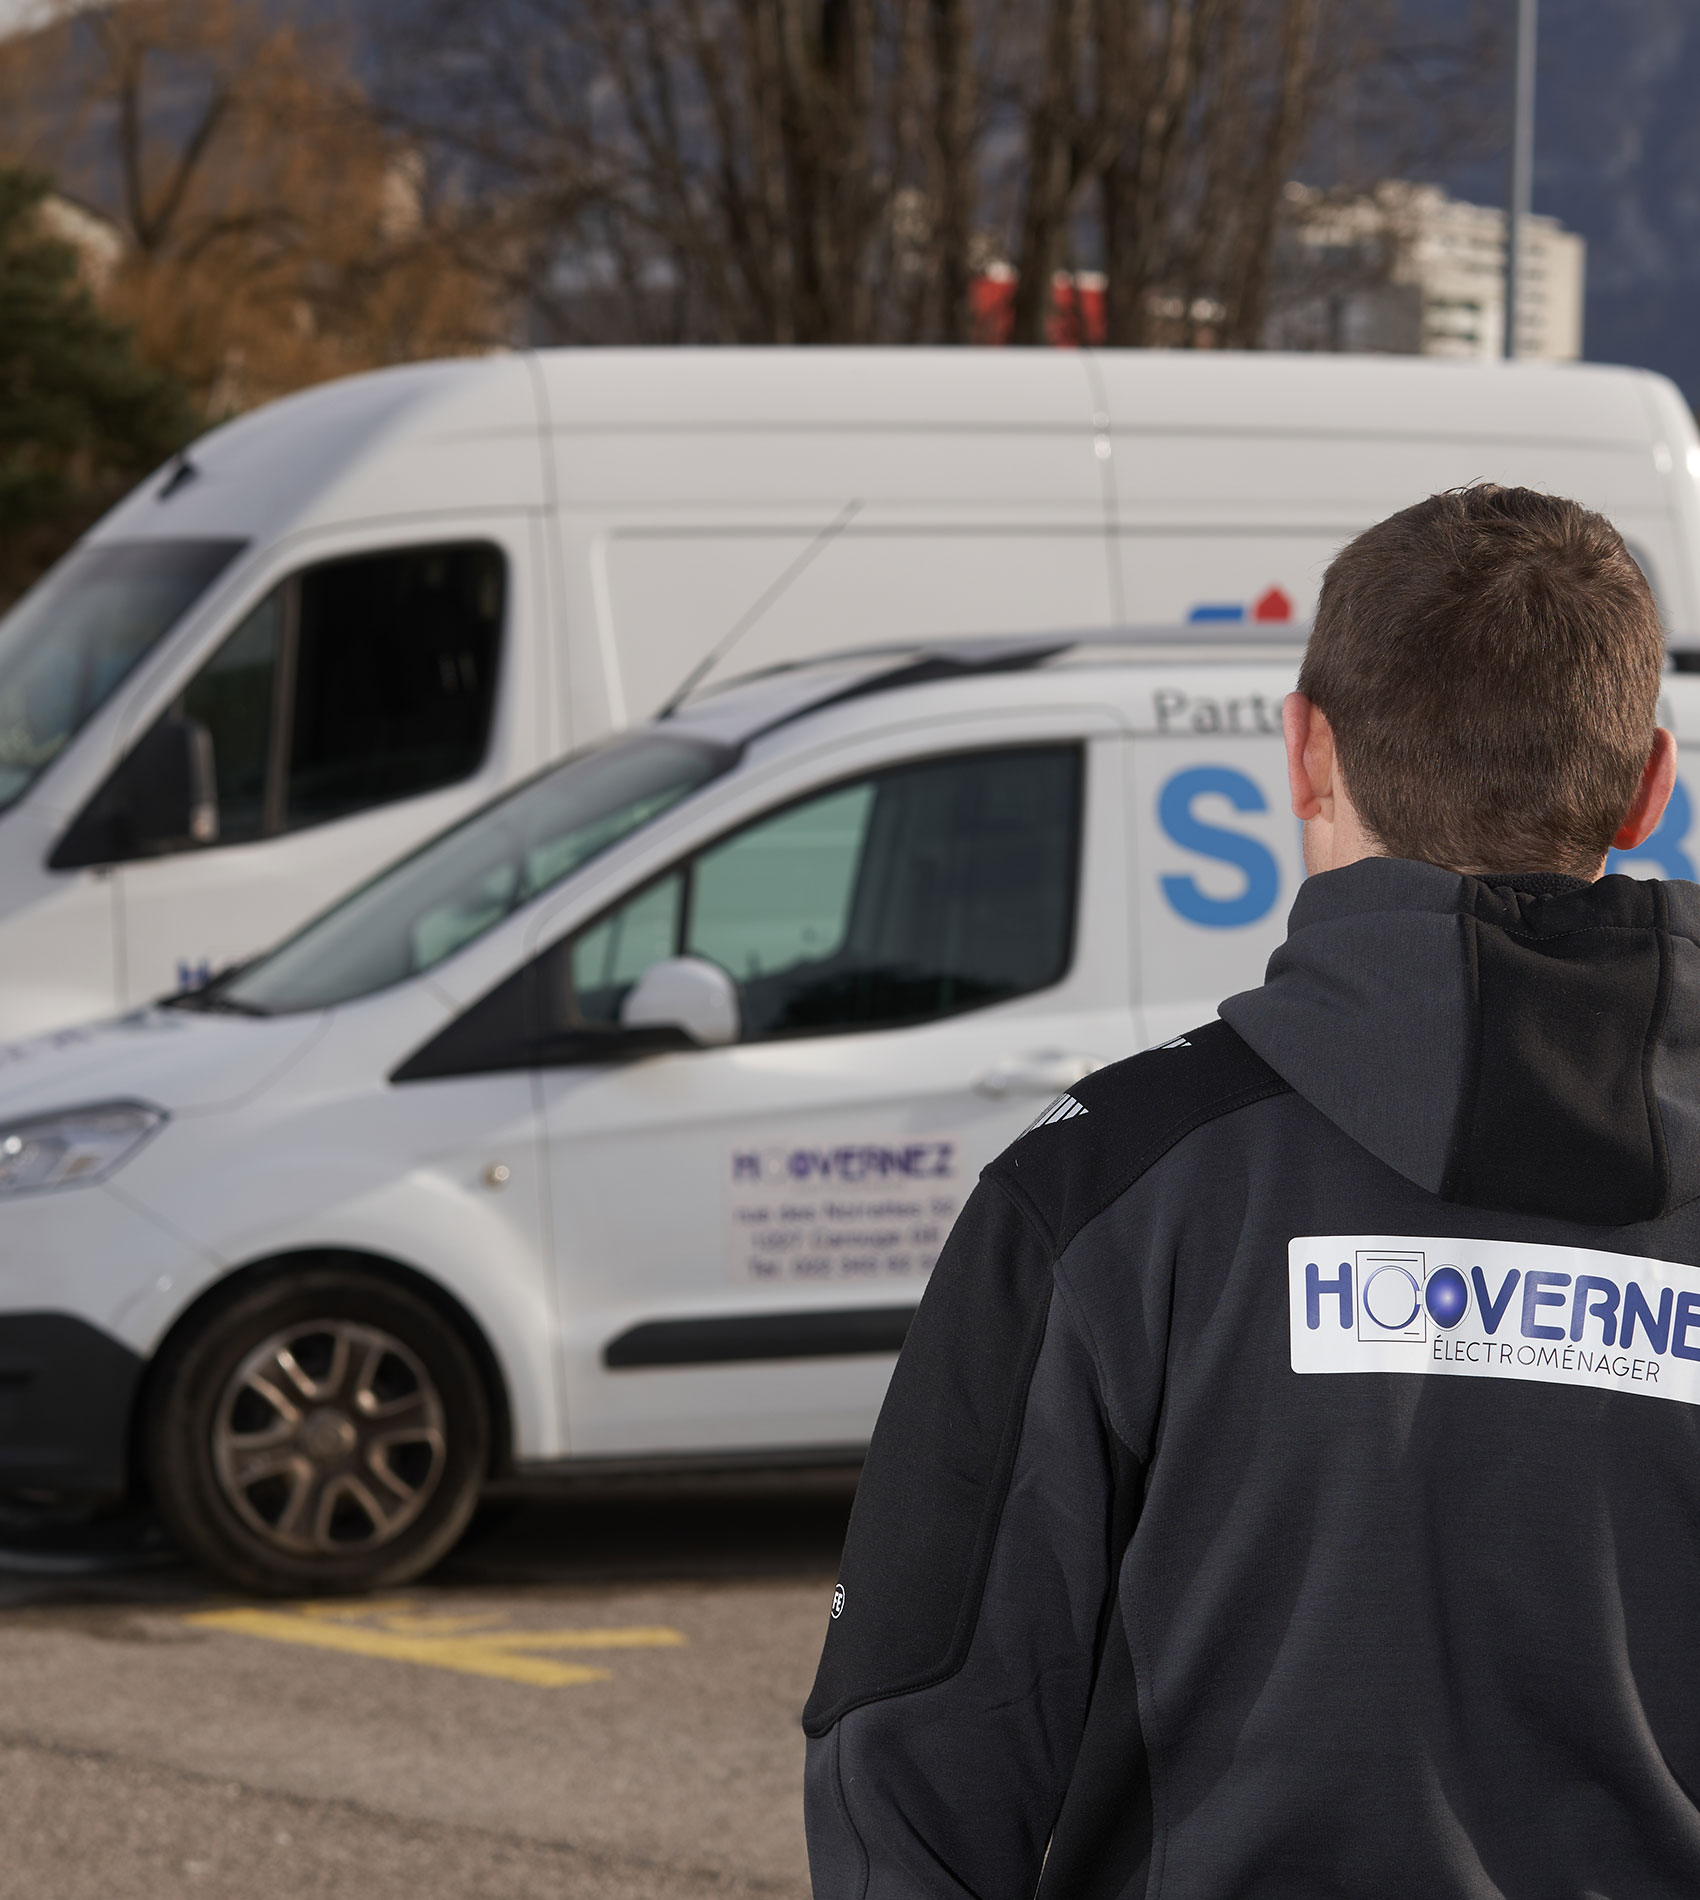 The 1st eco-friendly Appliance Repair Service in Geneva                                